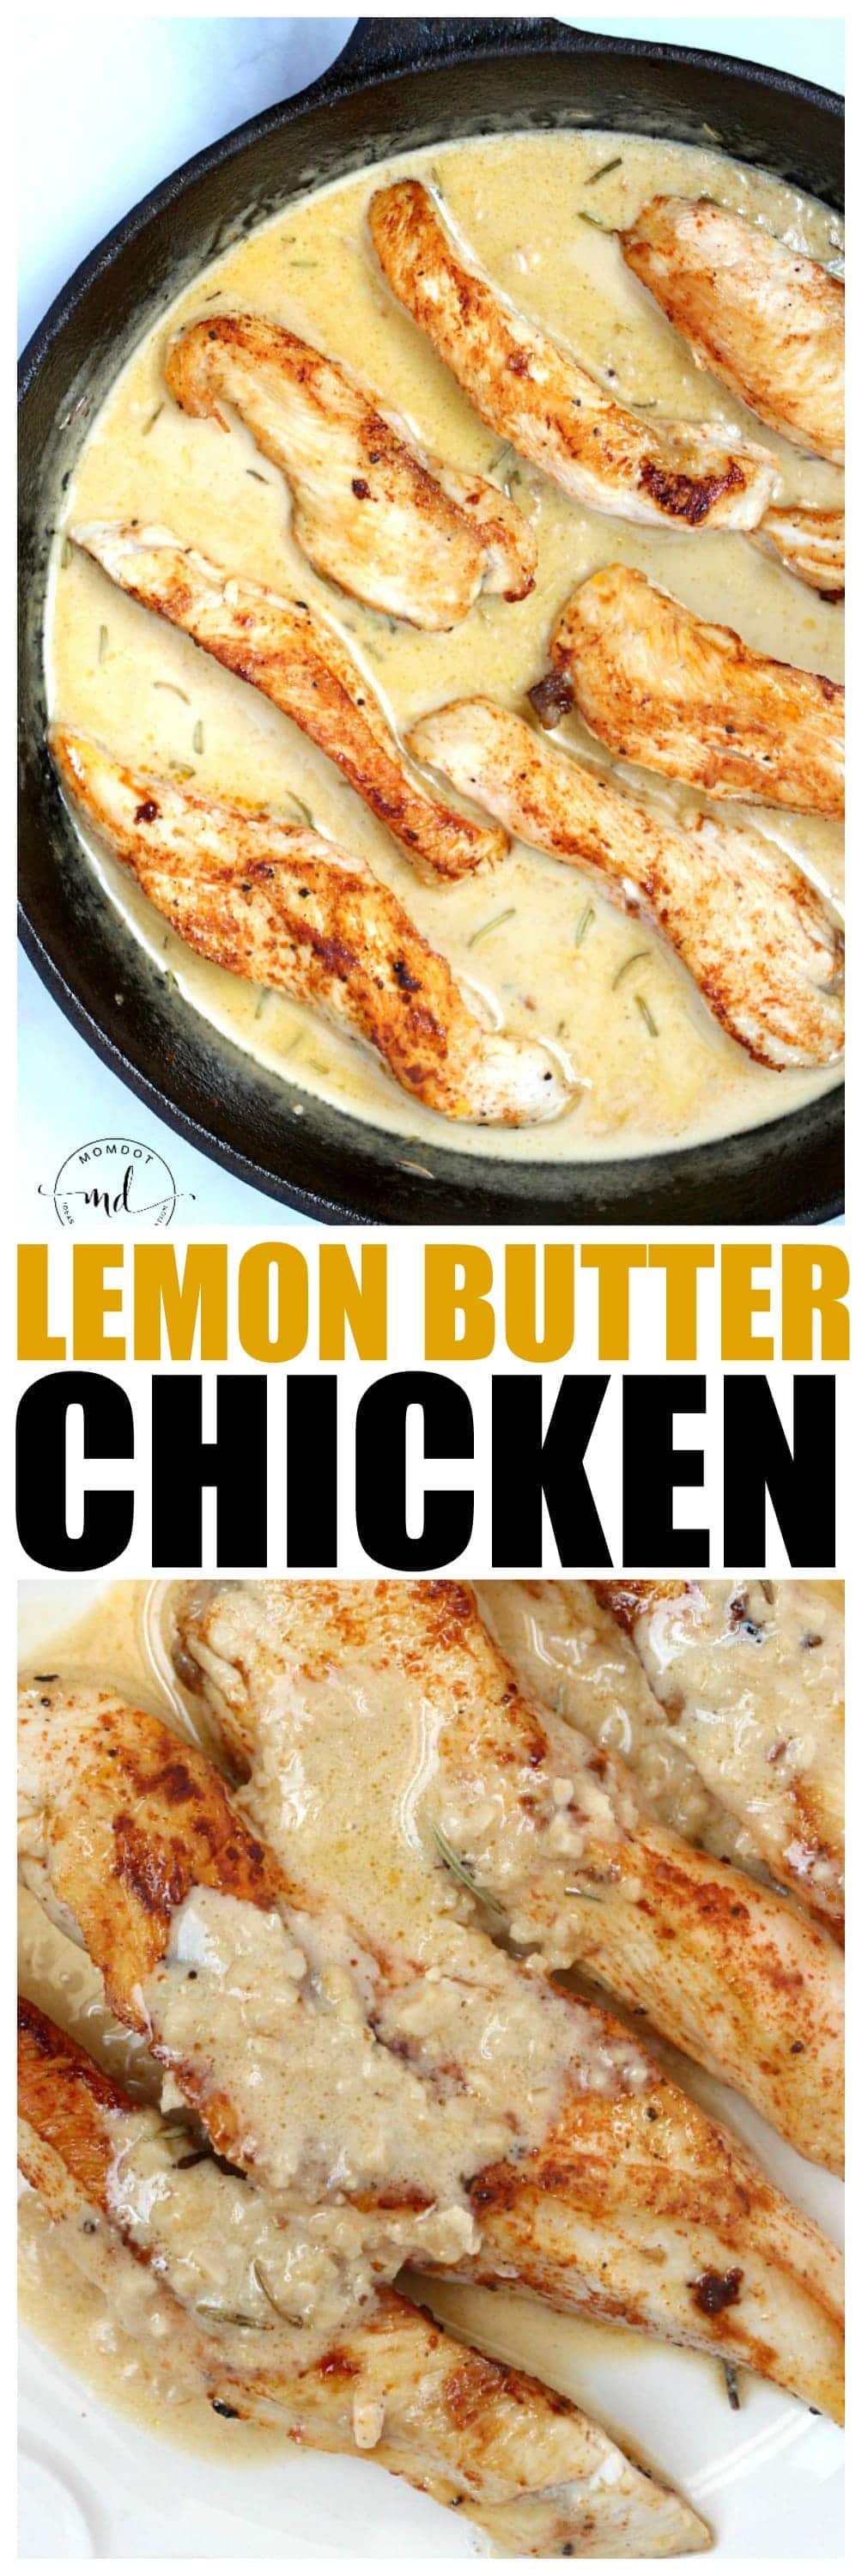 Lemon Butter Chicken Strips - skillet chicken with lemon butter garlic sauce